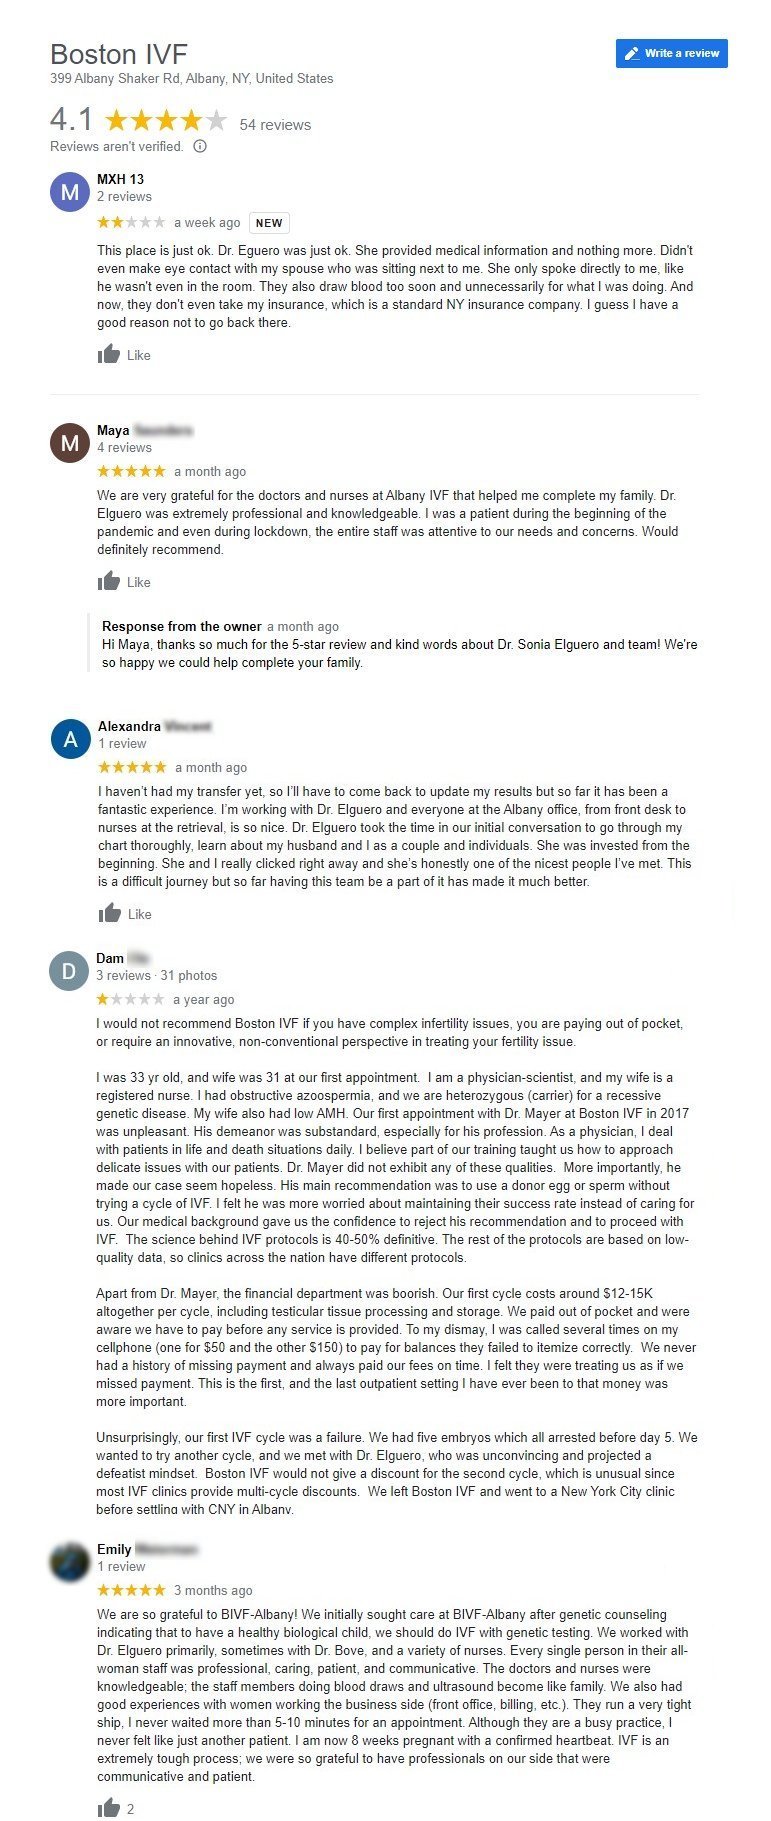 Boston IVF New York reviews